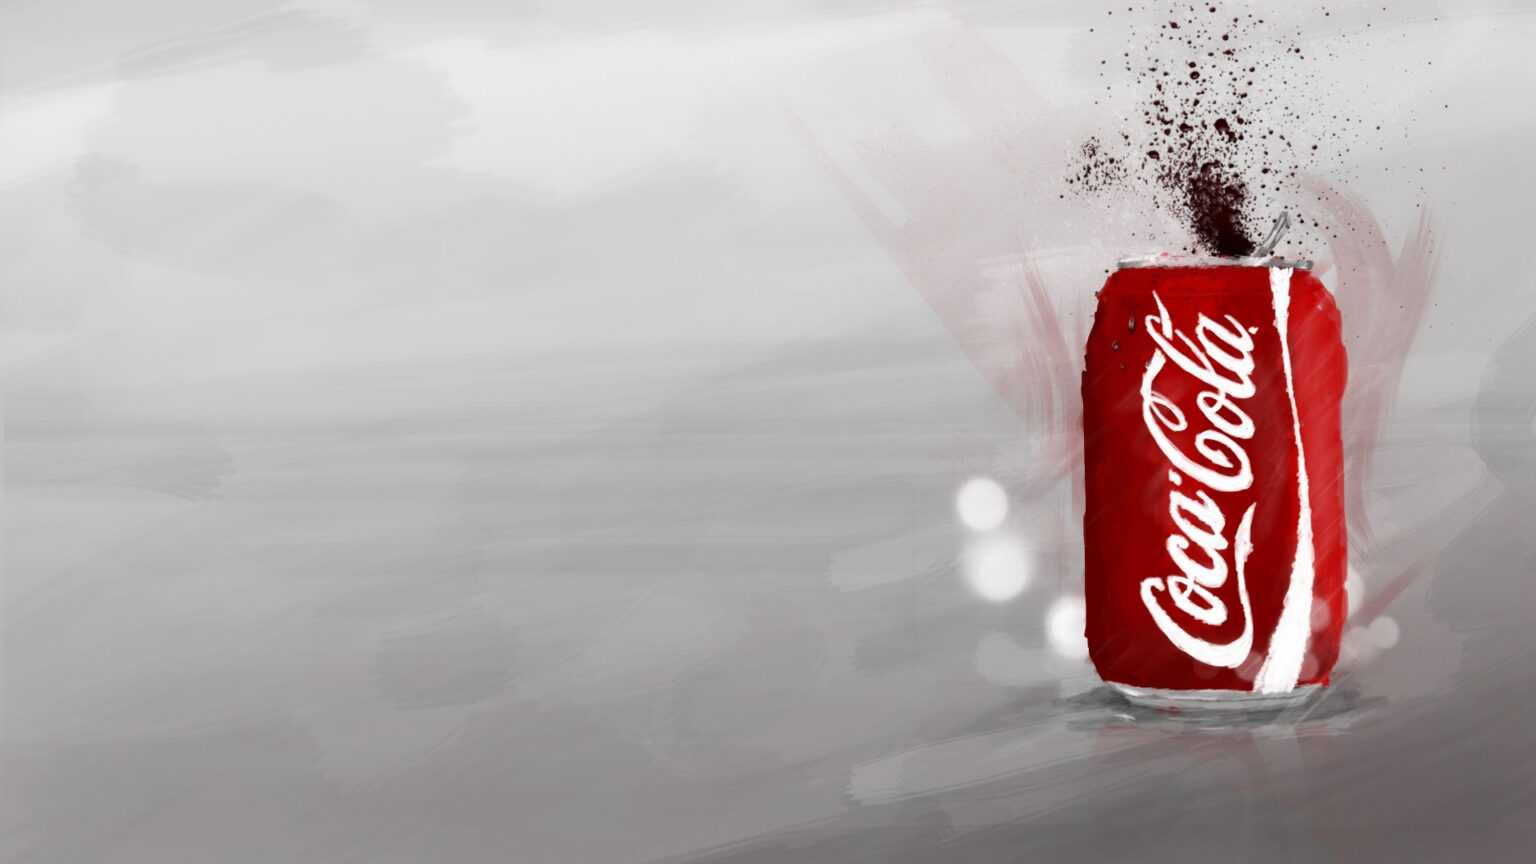 coca cola bottle label template psd